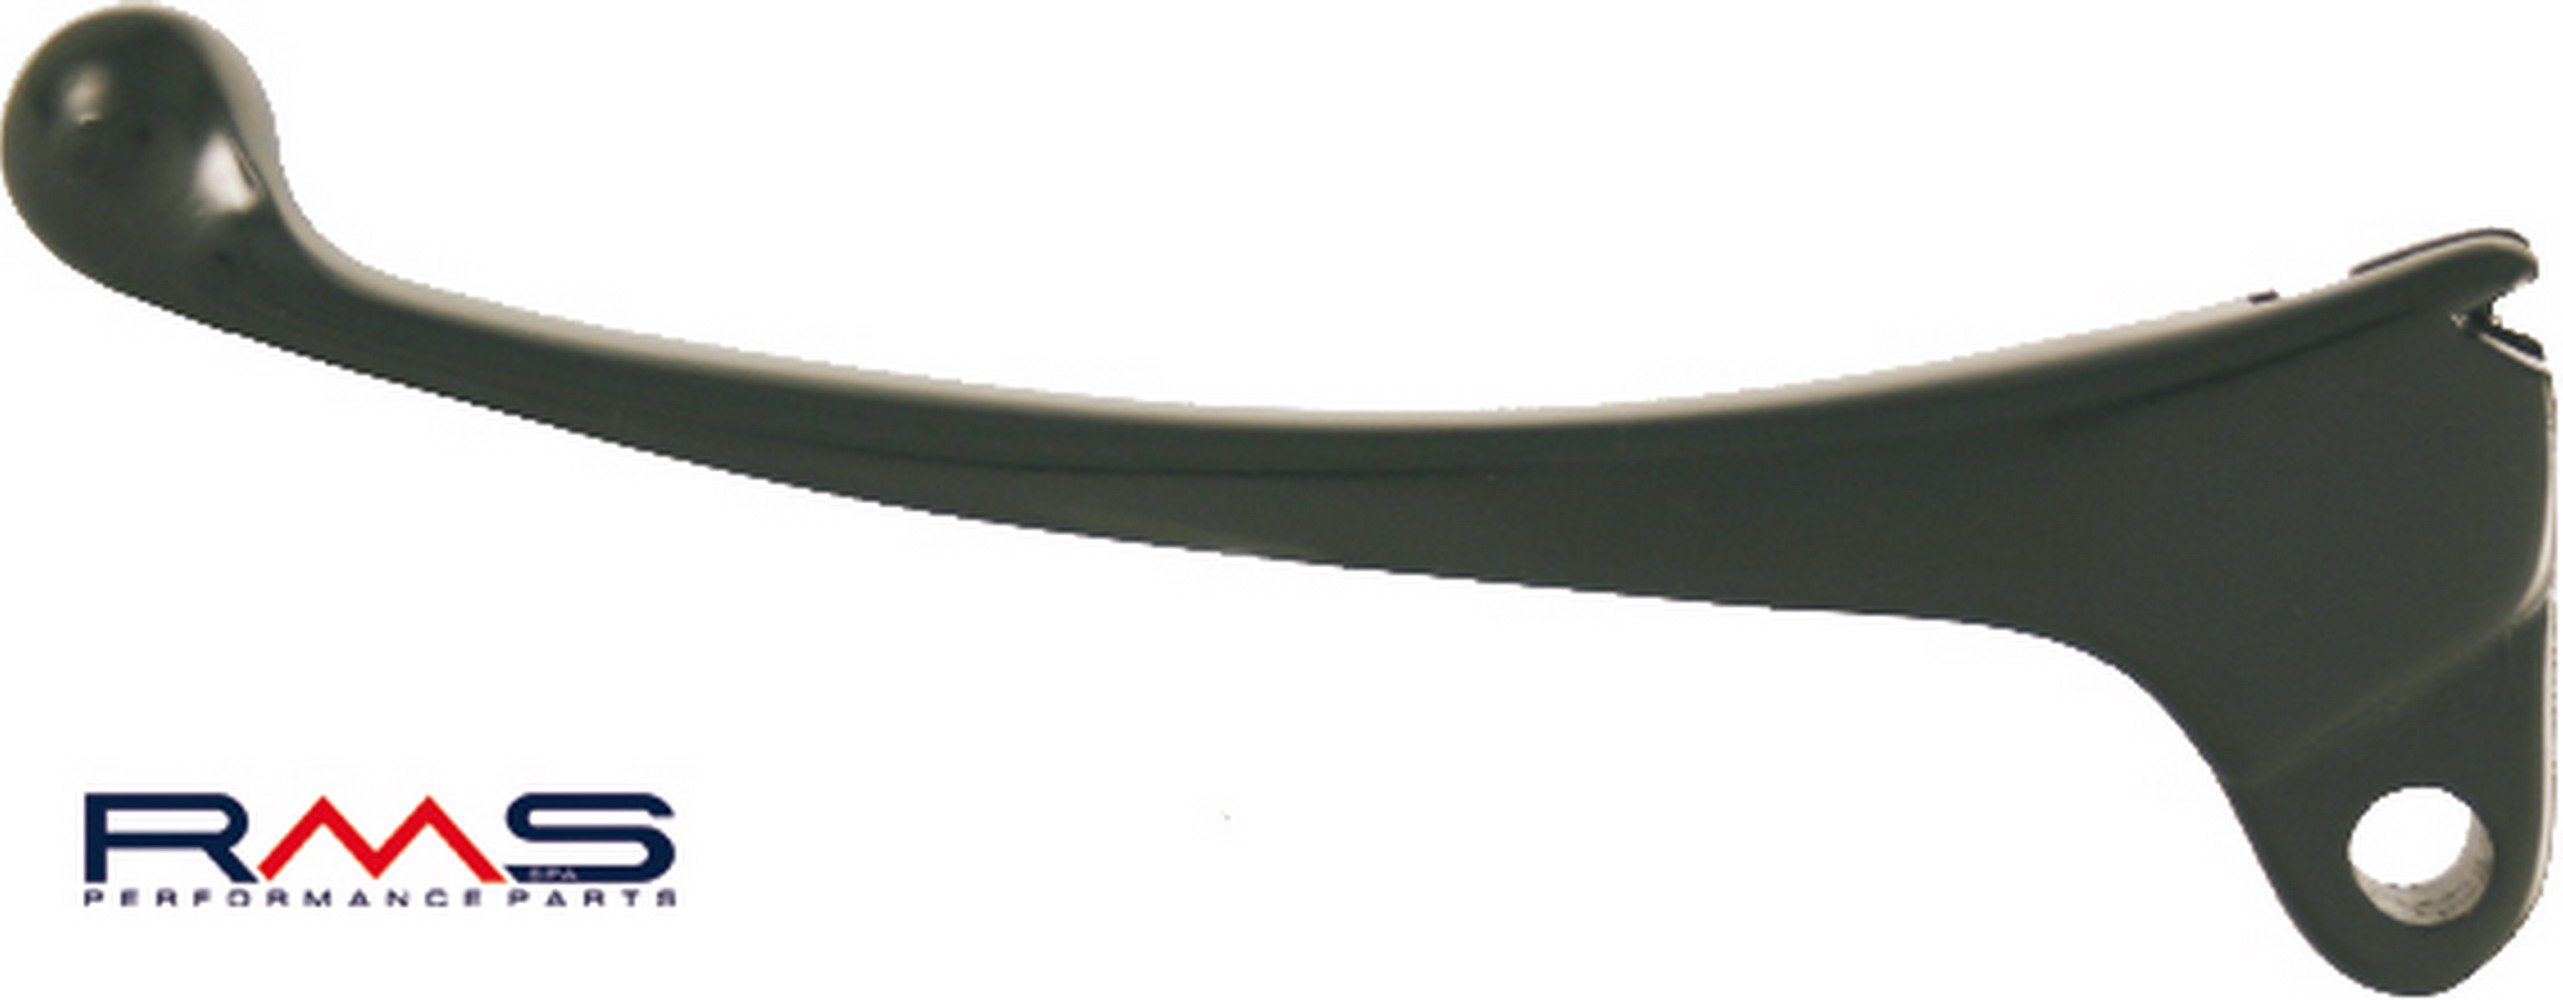 Obrázek produktu Páčka RMS 184100391 levý černý